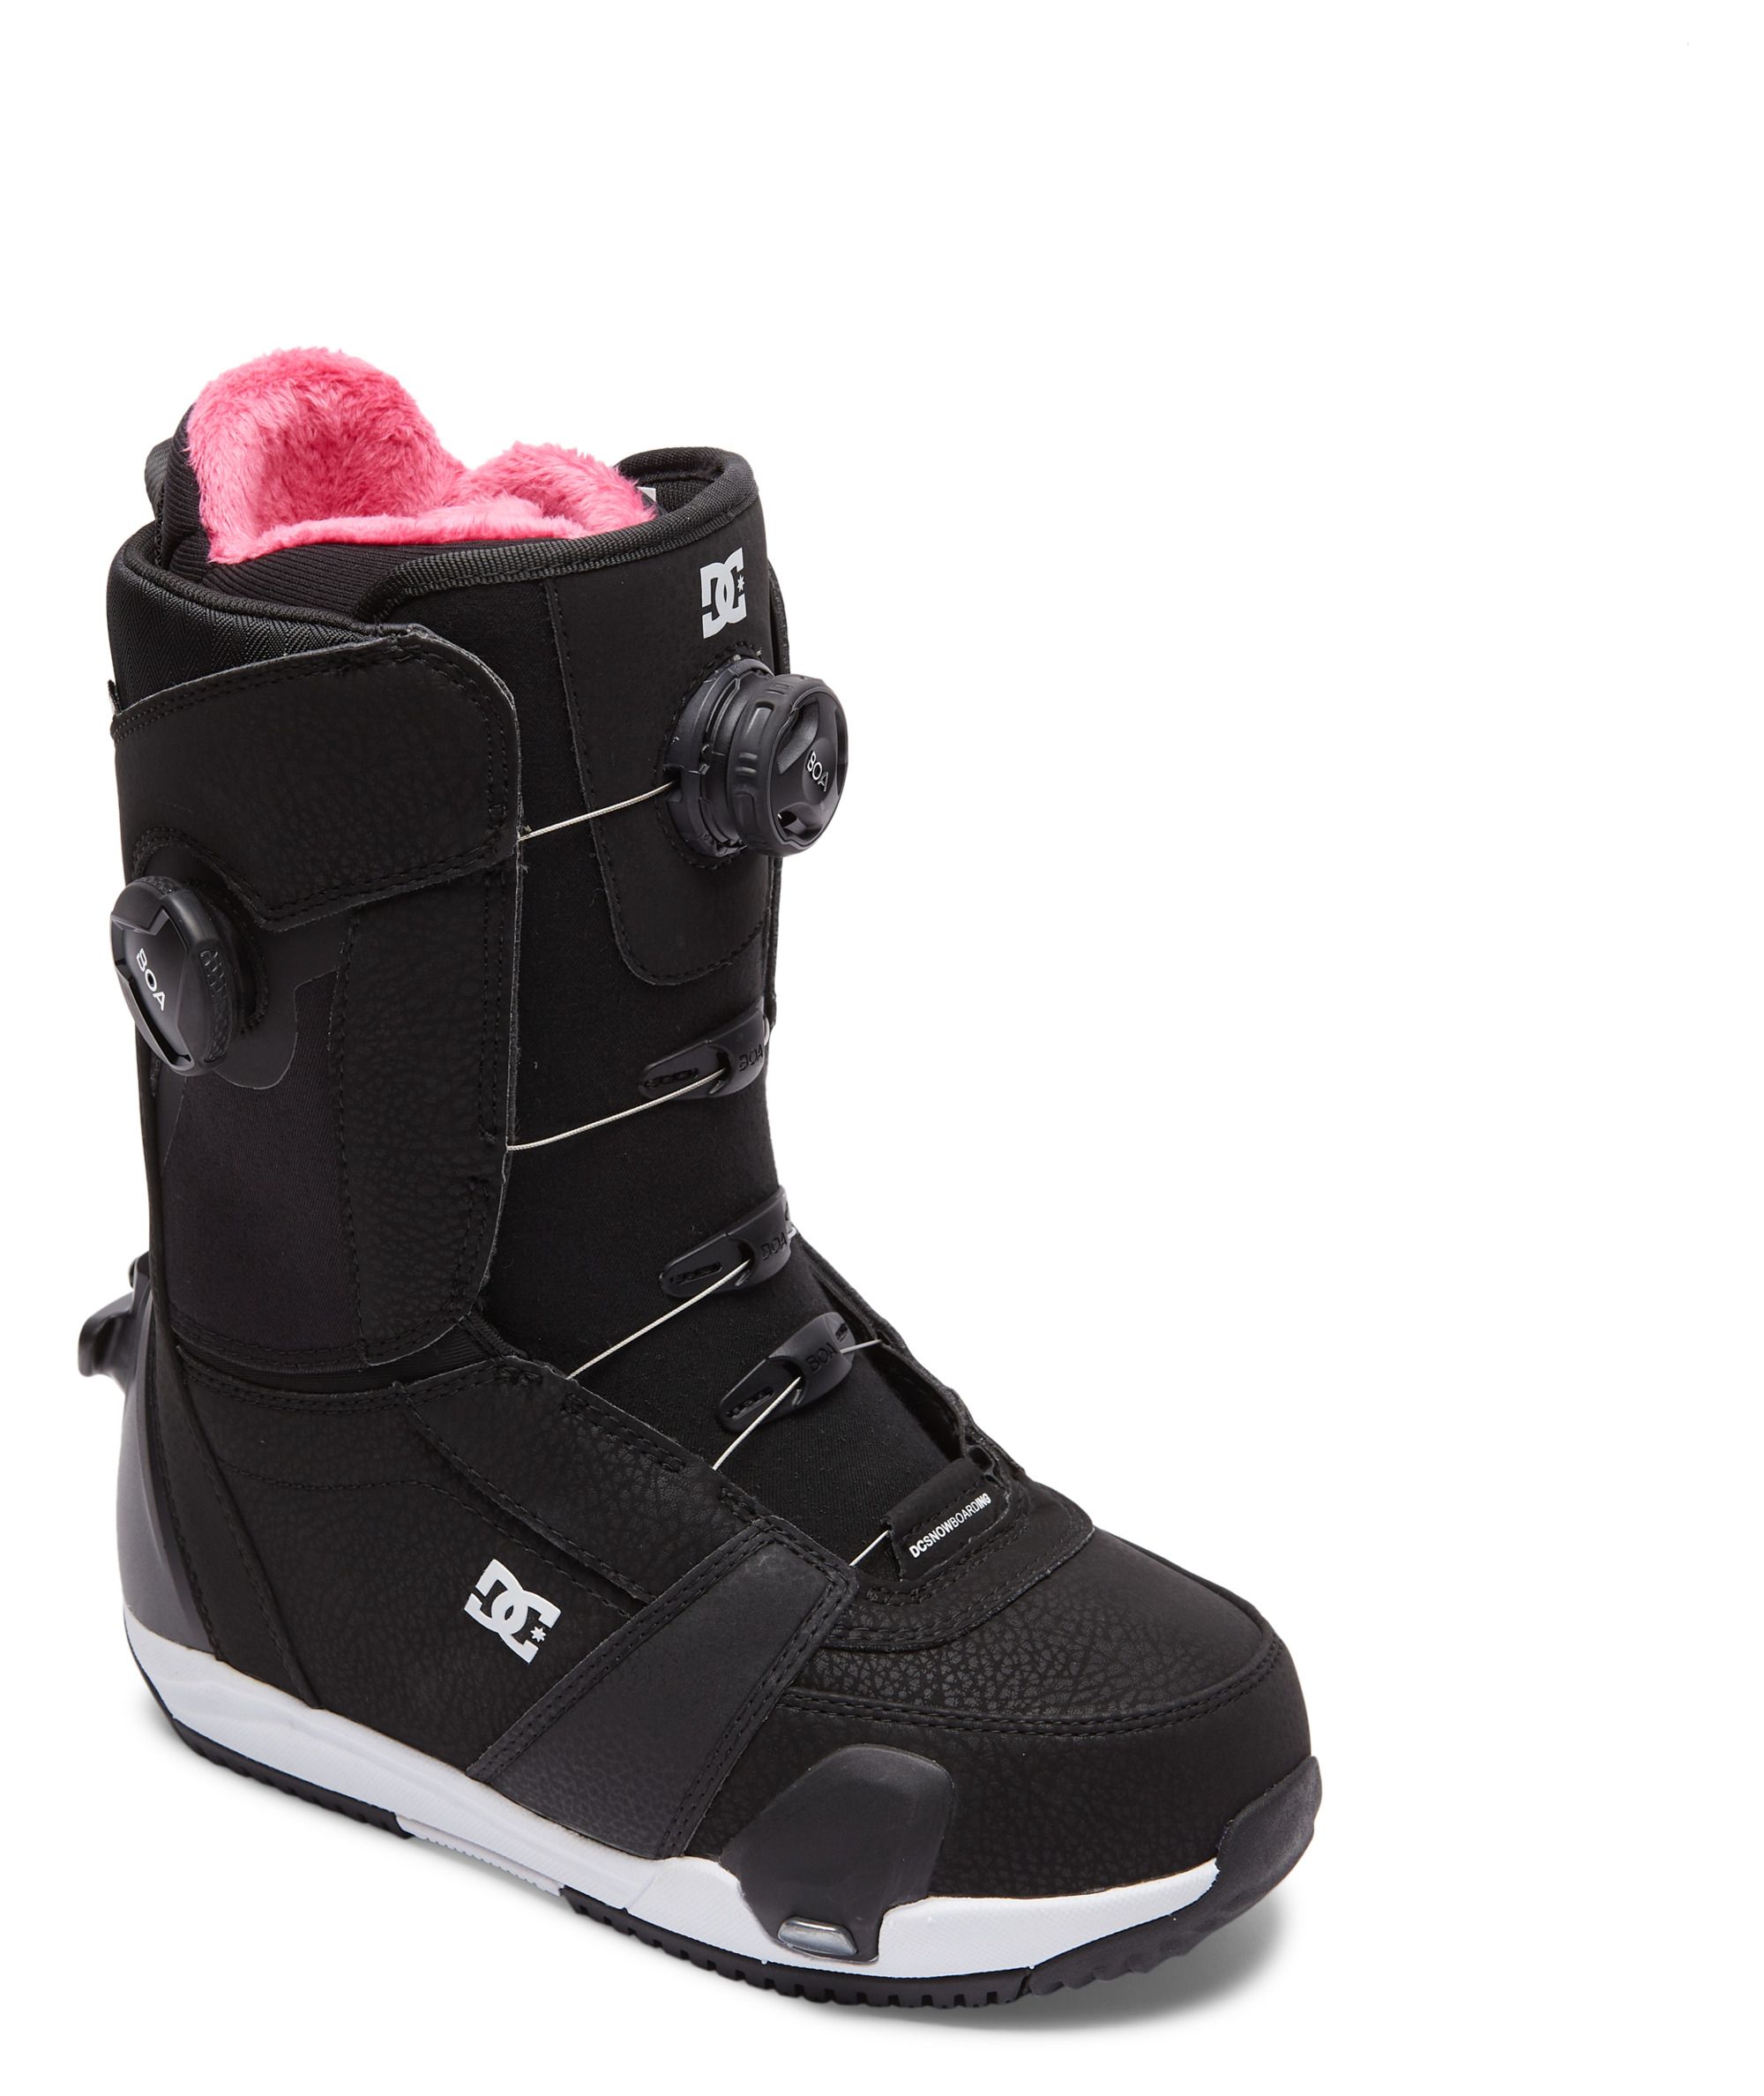 Boots de snowboard Lotus Step On - Black / White / Black